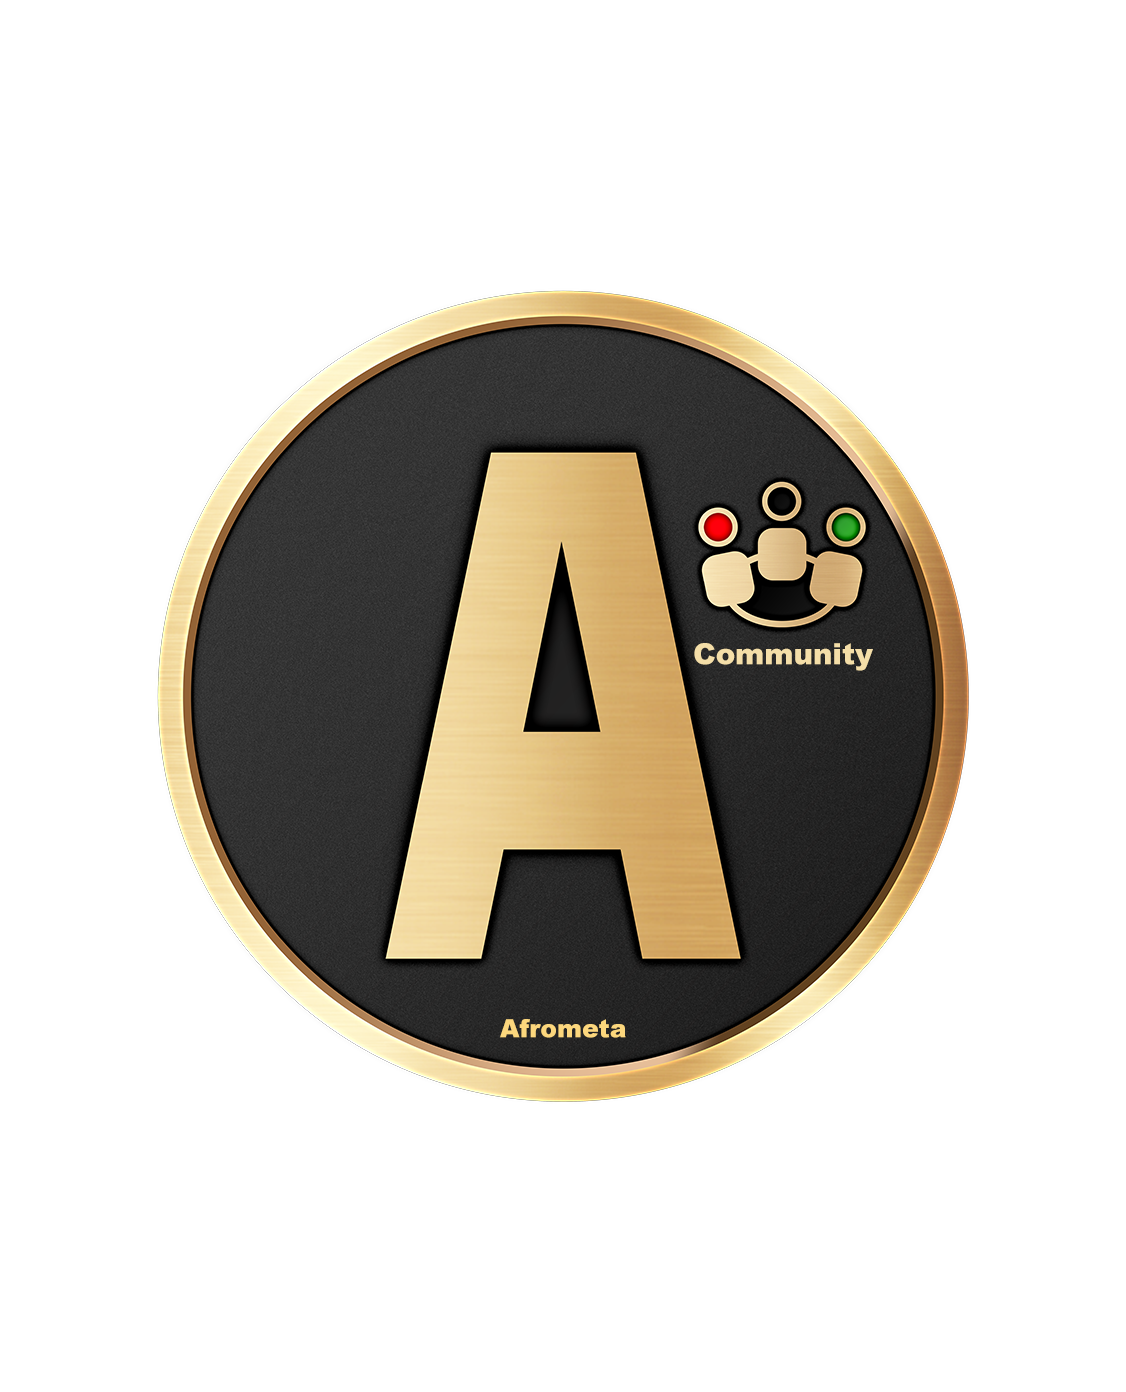 Community Badge